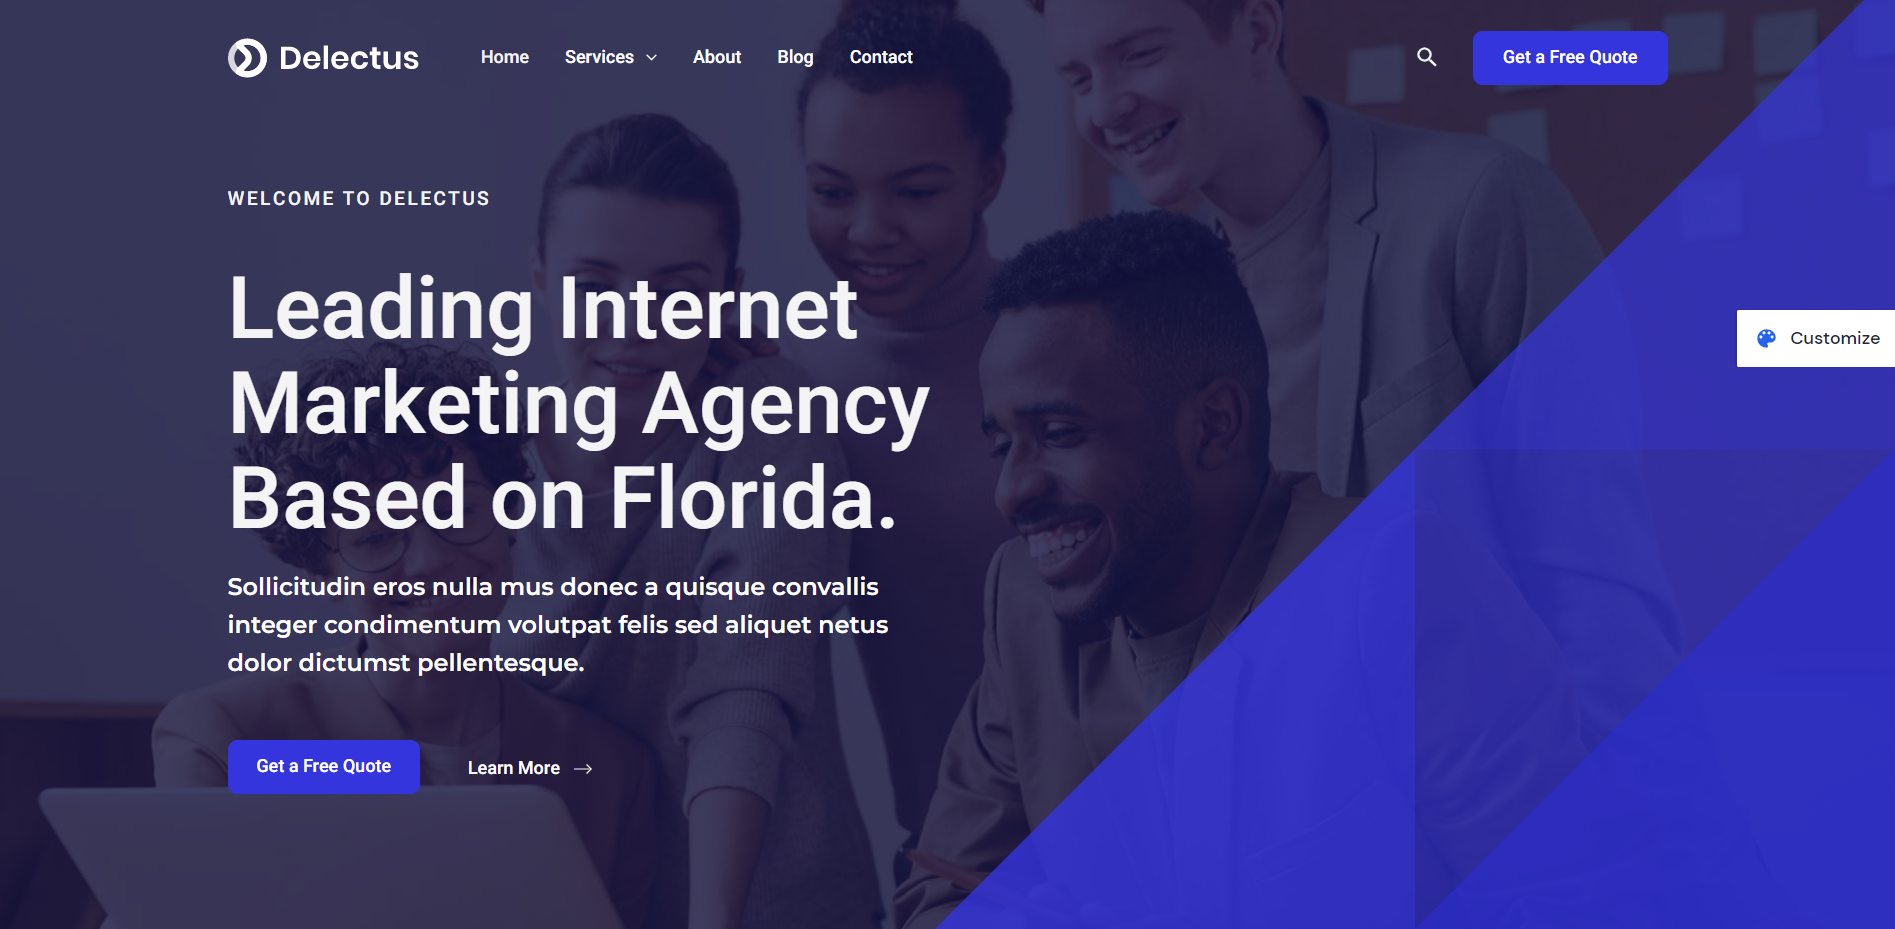 Astra digital marketing agency site demo